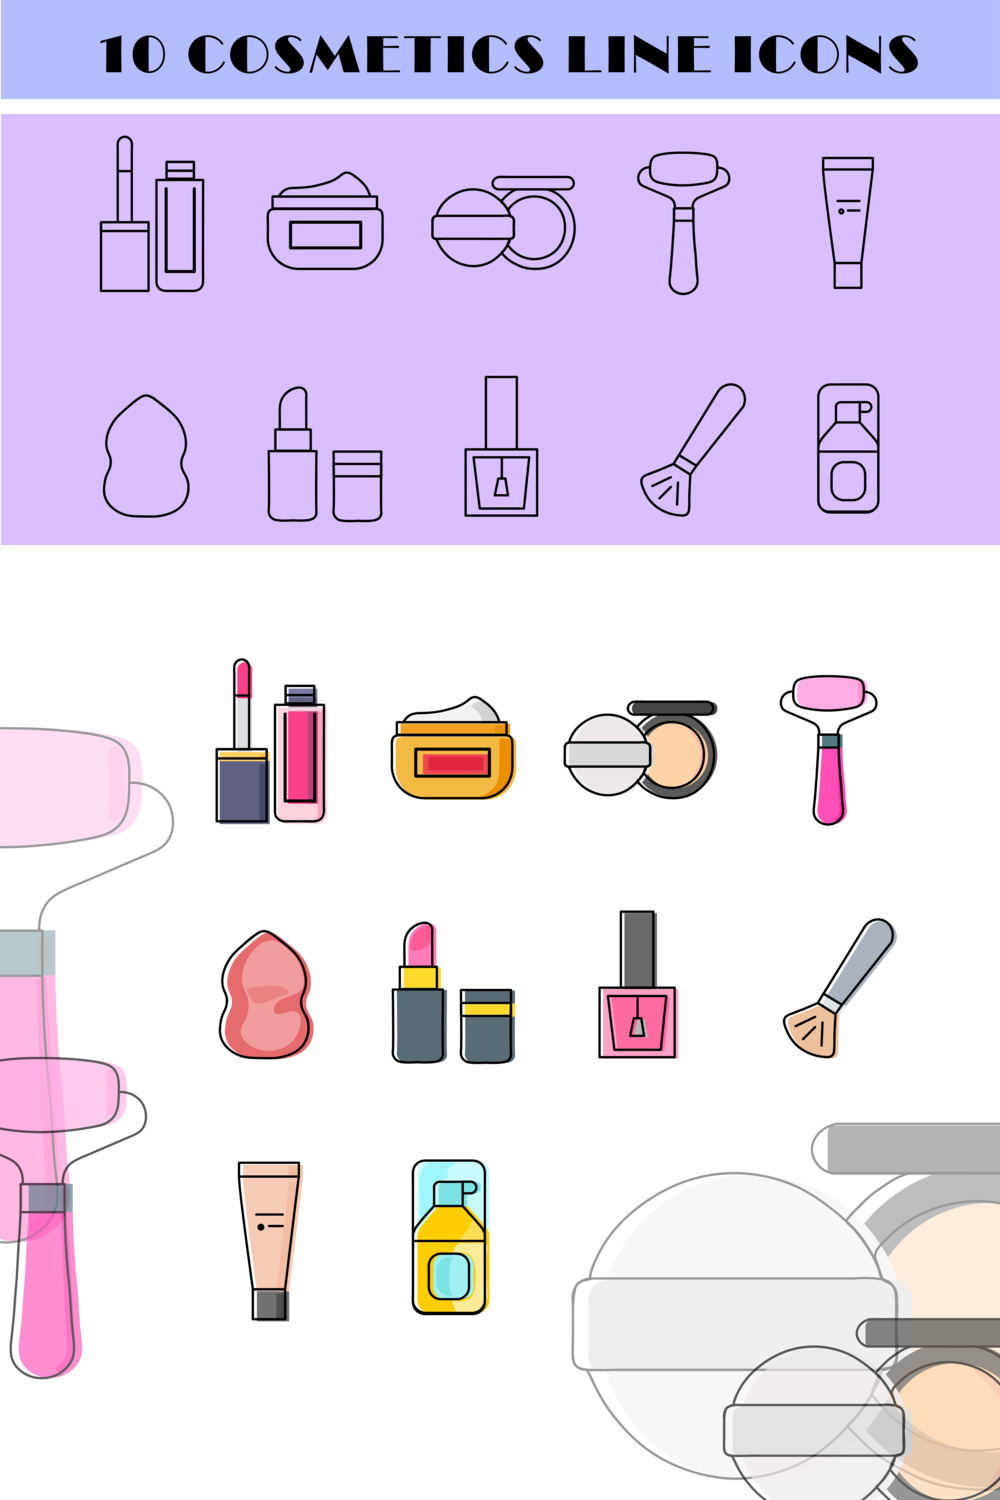 10 Cosmetics Line Icons pinterest image.